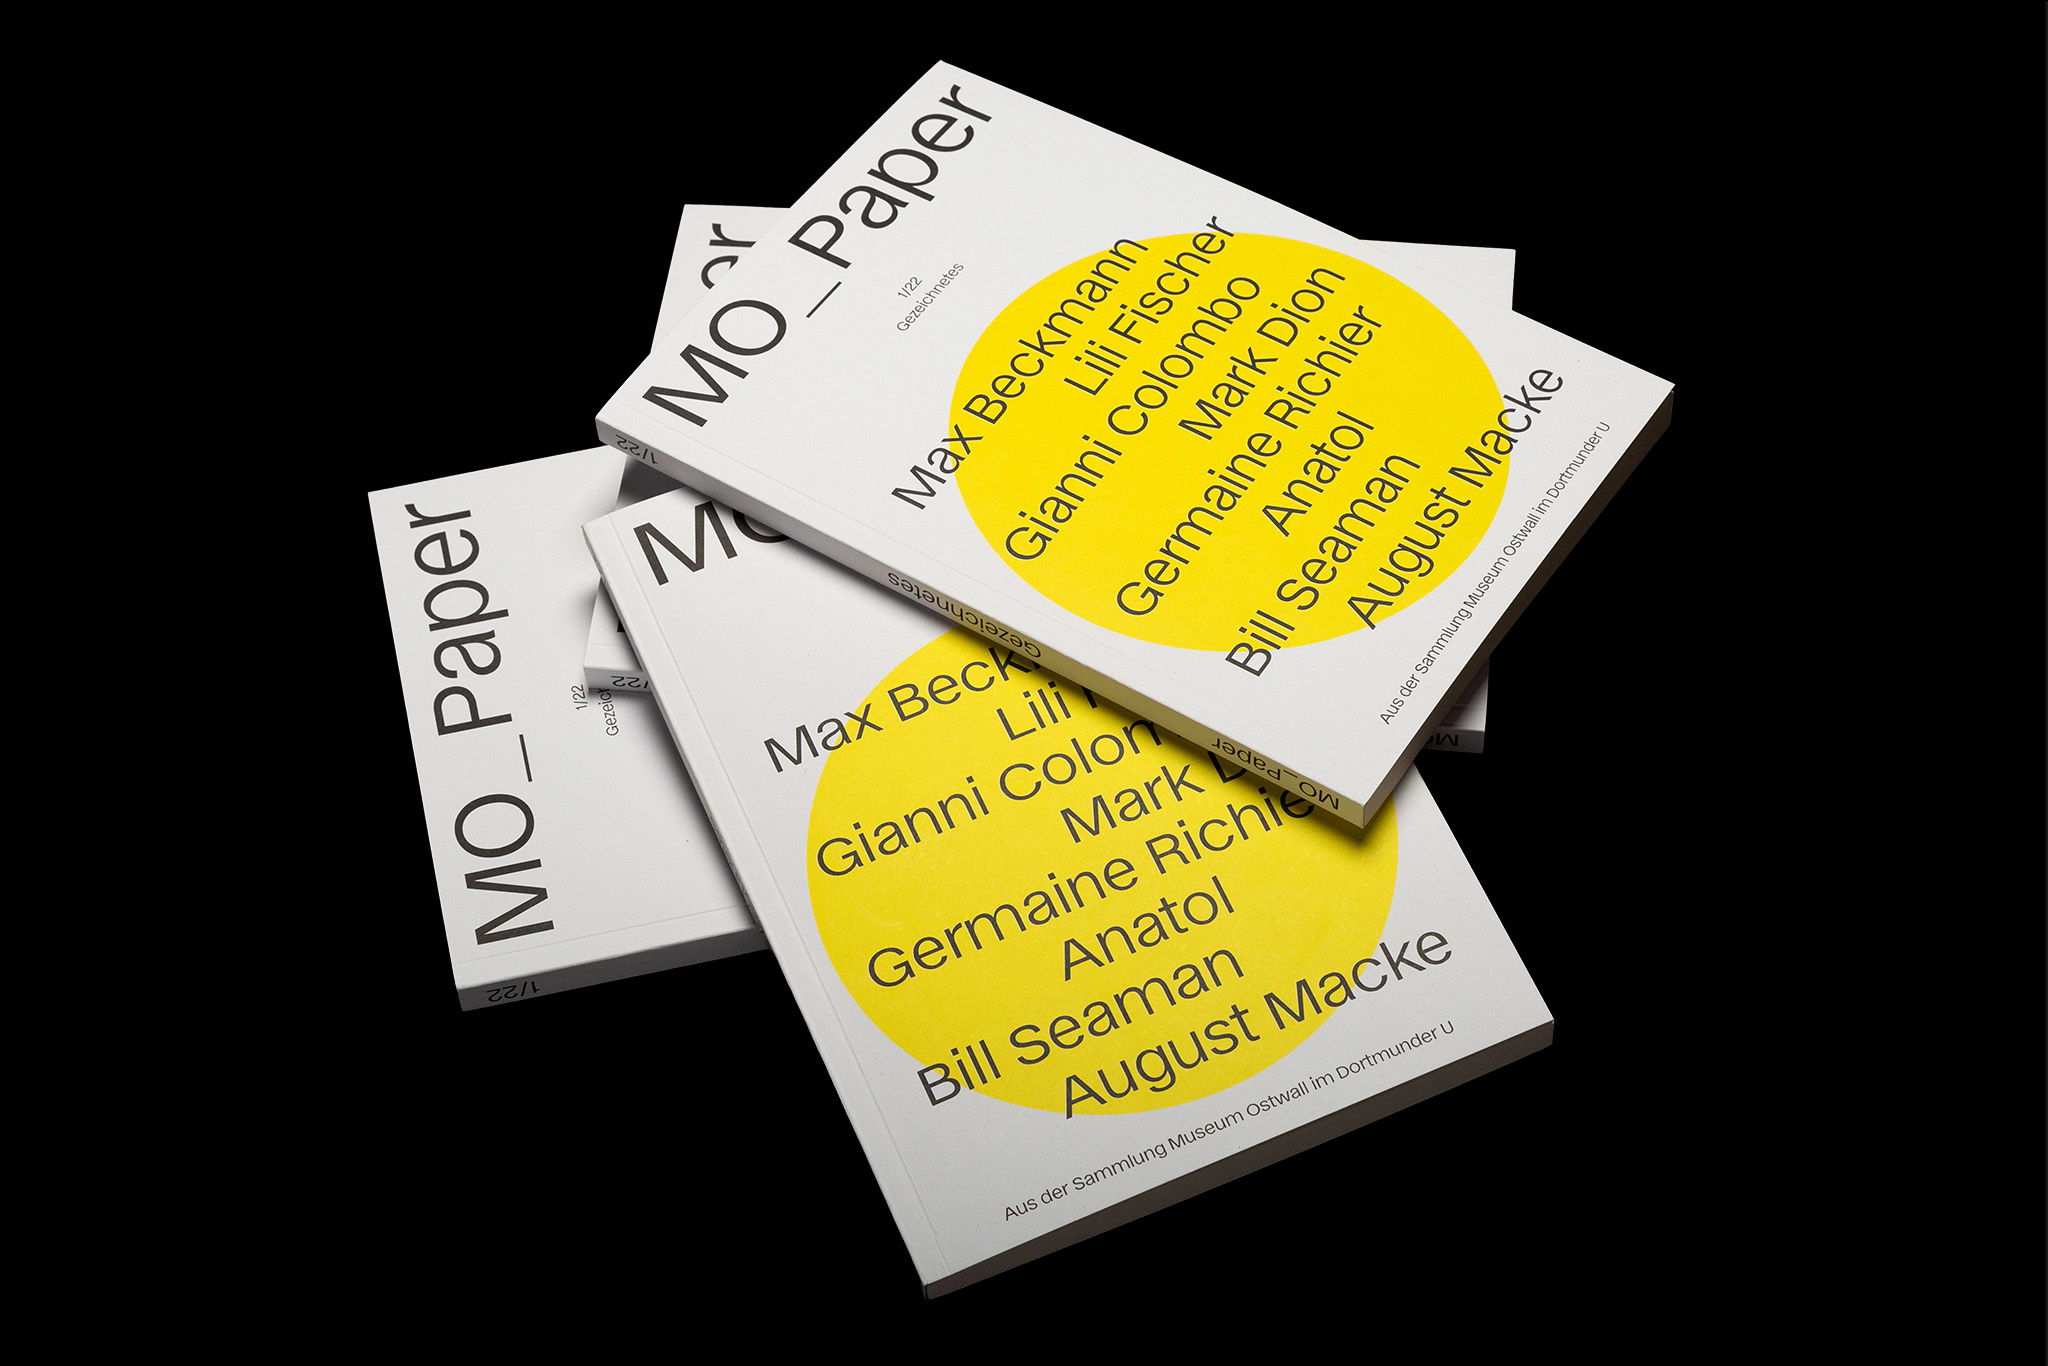 Stapel Magazine mit gelbem Kreis / Stack of magazines with yellow circle